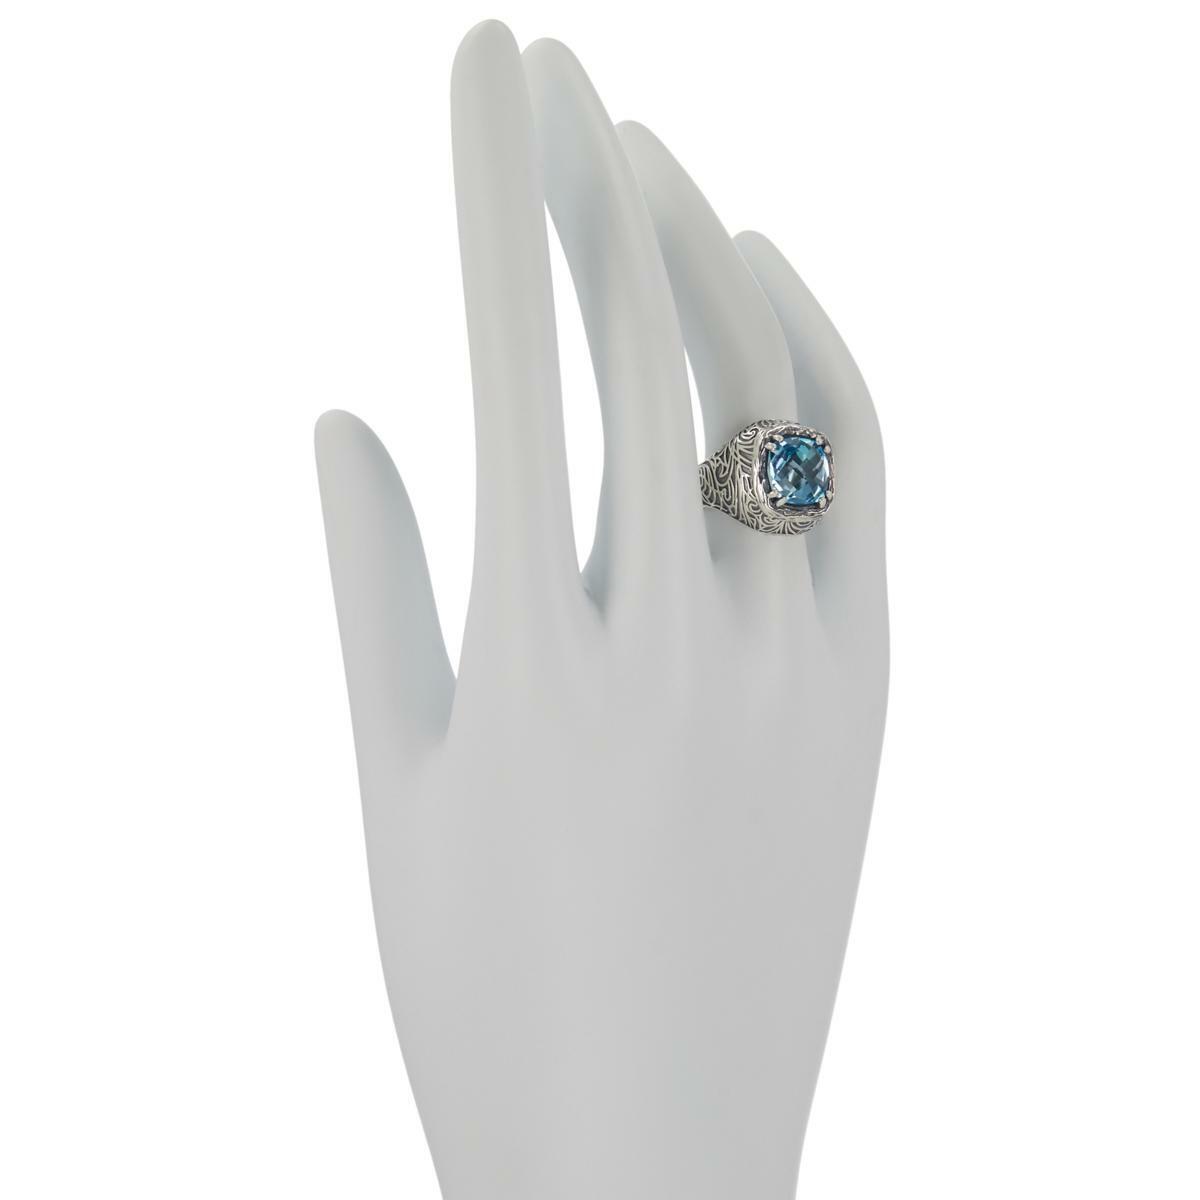 LiPaz 4.5ctw Blue Topaz Sterling Silver Ring Size 5 HSN $100.00